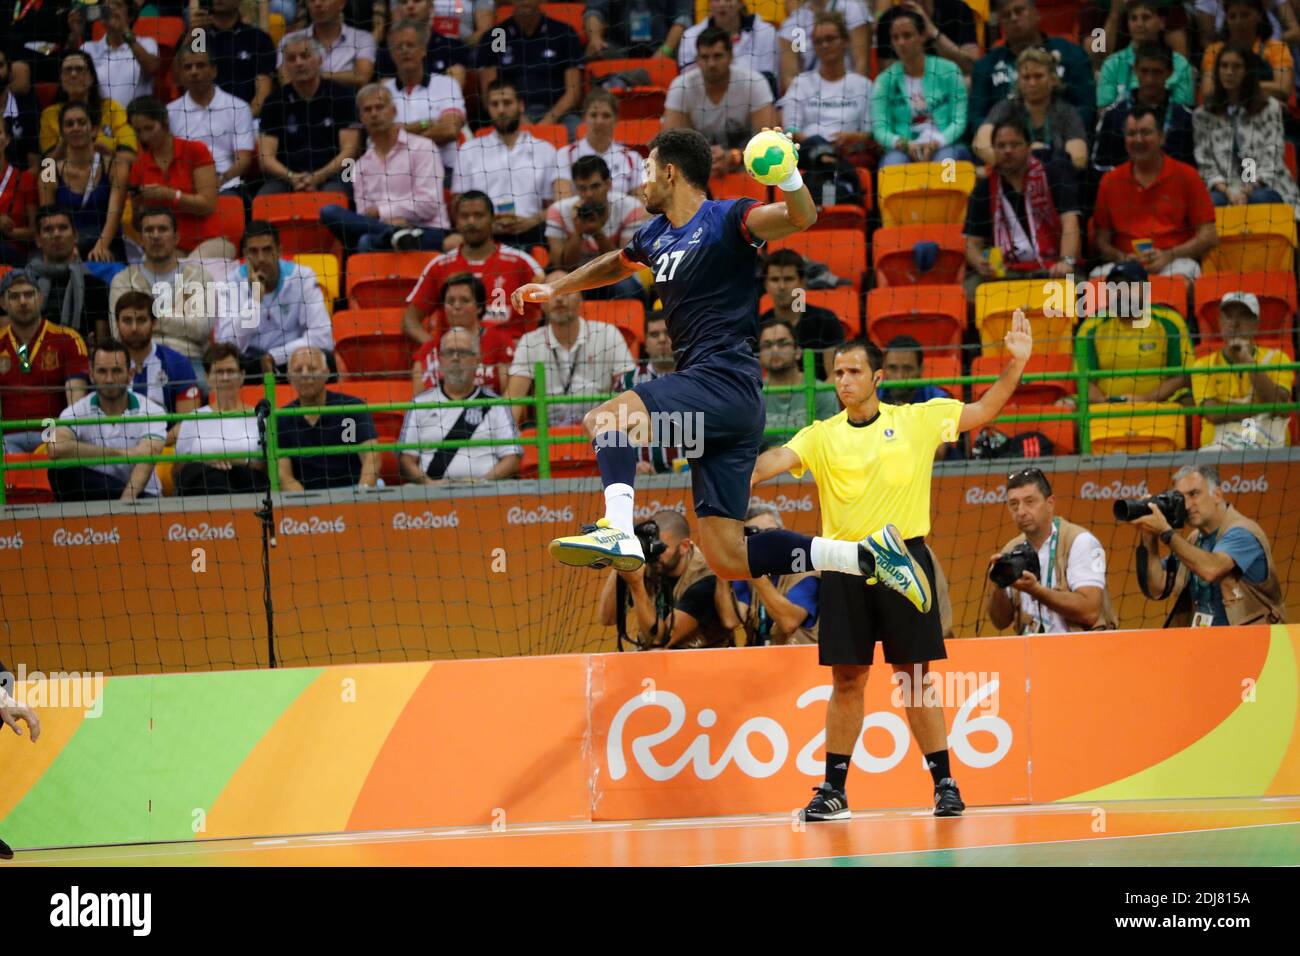 France's Adrien Dipanda during the Final handball match France vs Danemark in Future Arena, Rio, Brasil on August 21st, 2016. Photo by Henri Szwarc/ABACAPRESS.COM Stock Photo